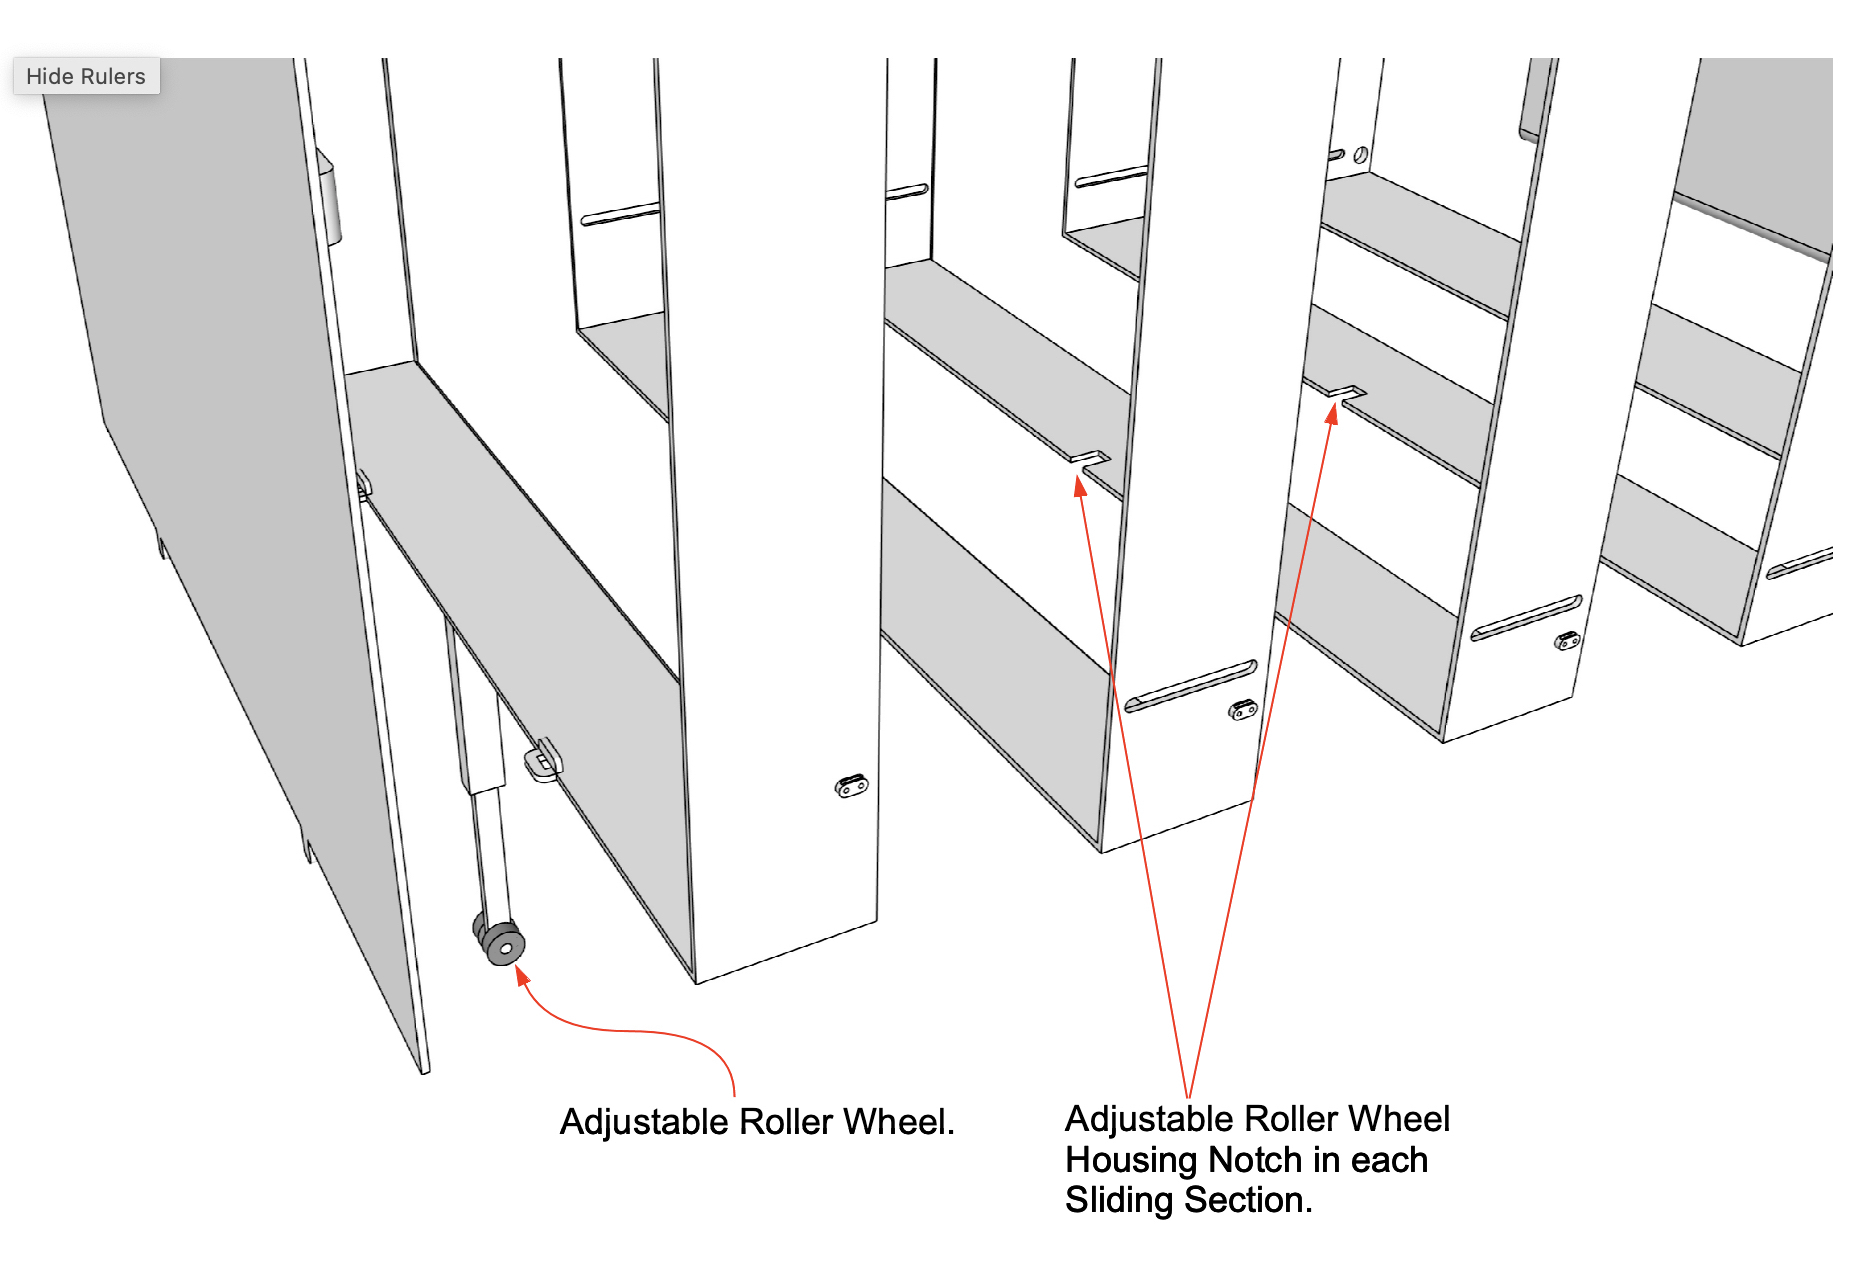 Adjustable Roller Wheel Housing Notches.jpeg